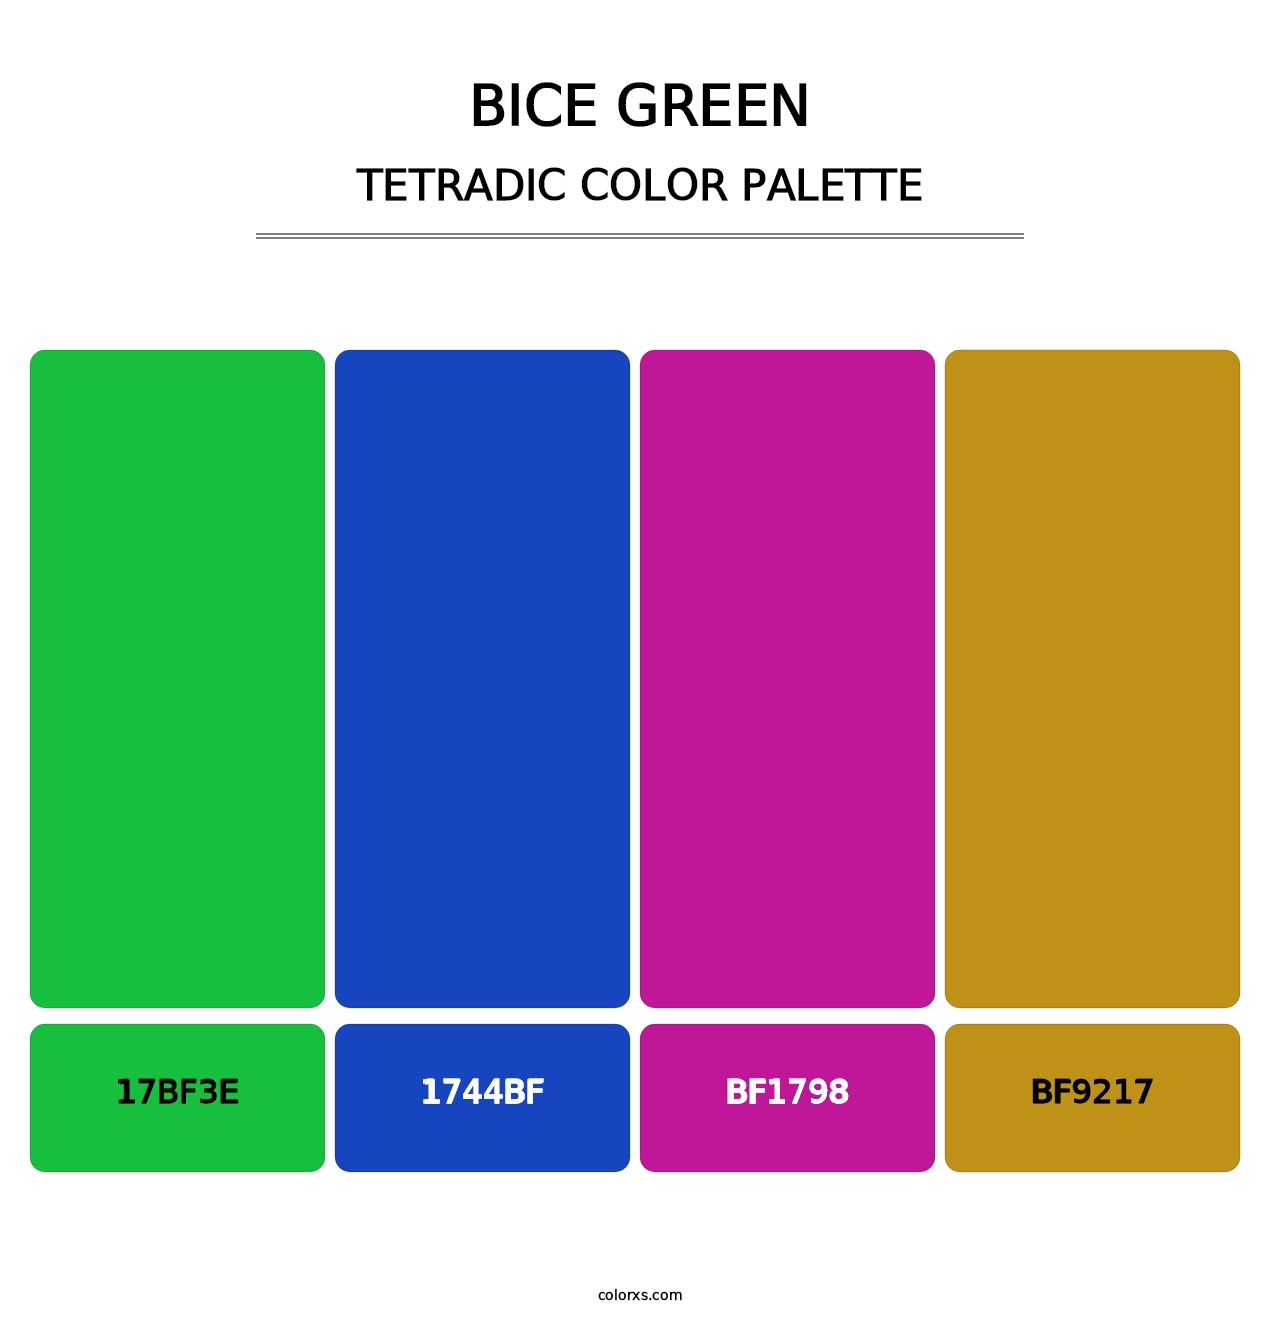 Bice Green - Tetradic Color Palette